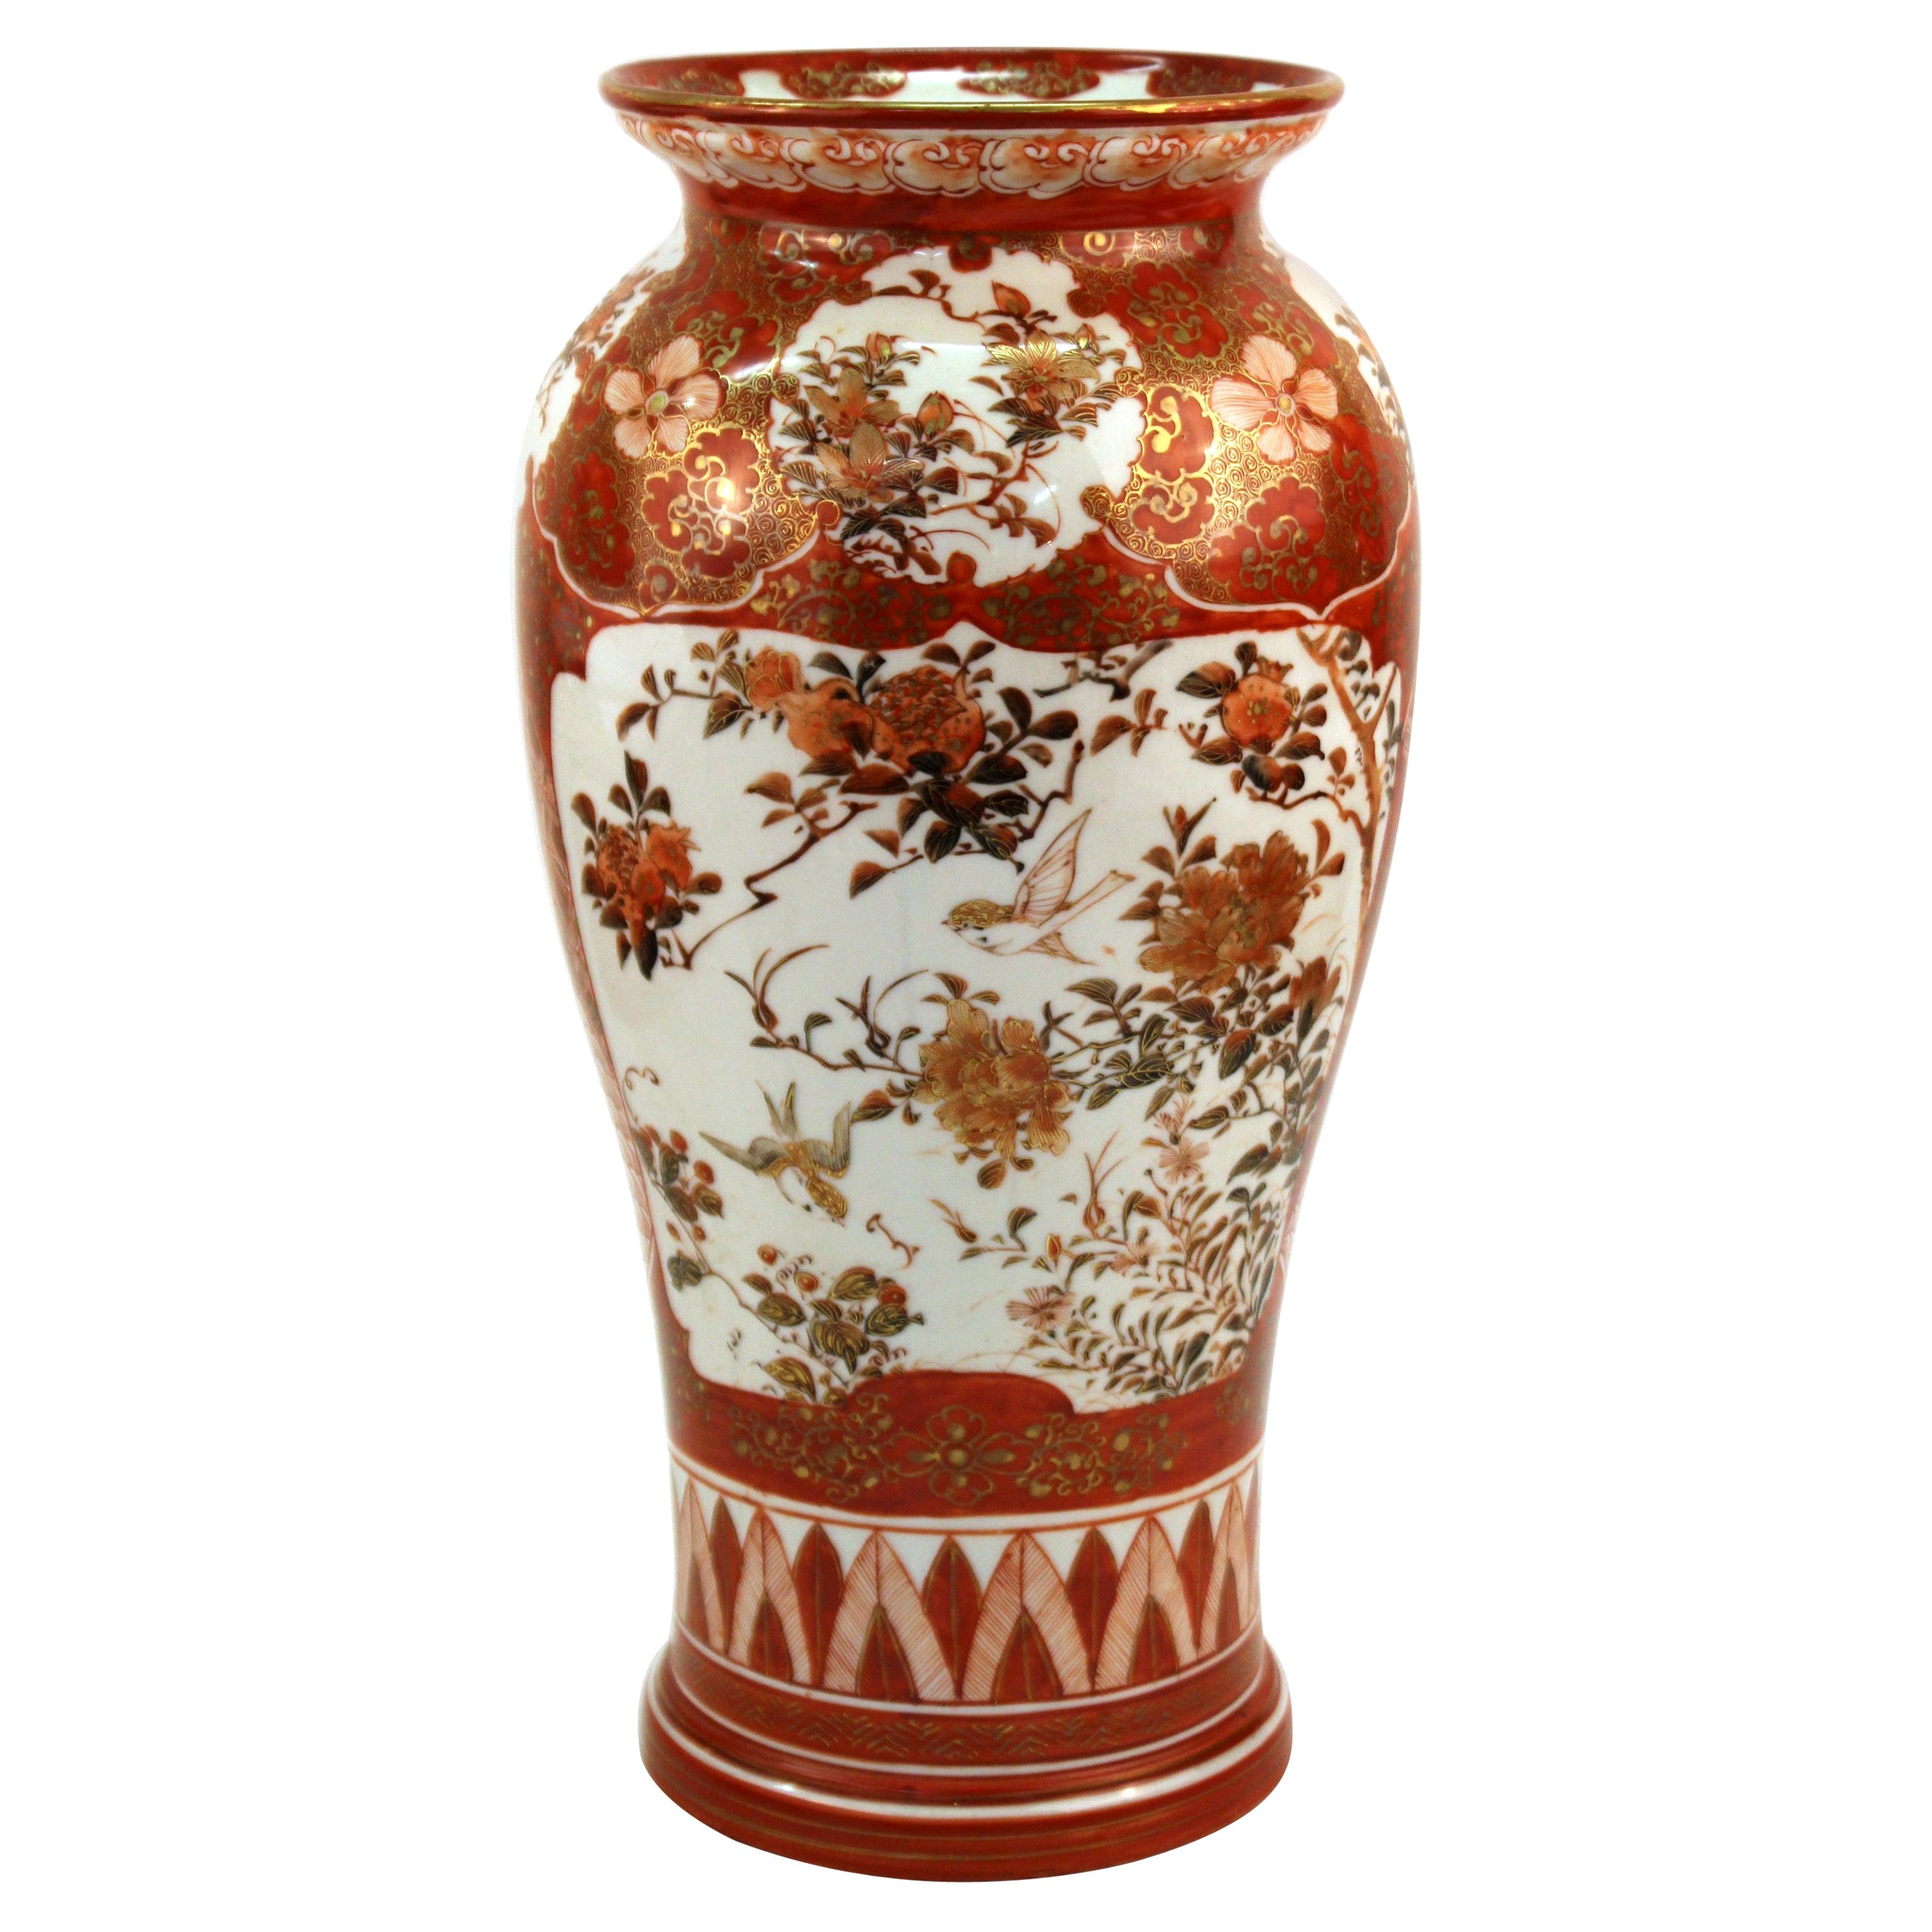 Japanese Kutani Ware Porcelain Baluster Vase with Floral Decor